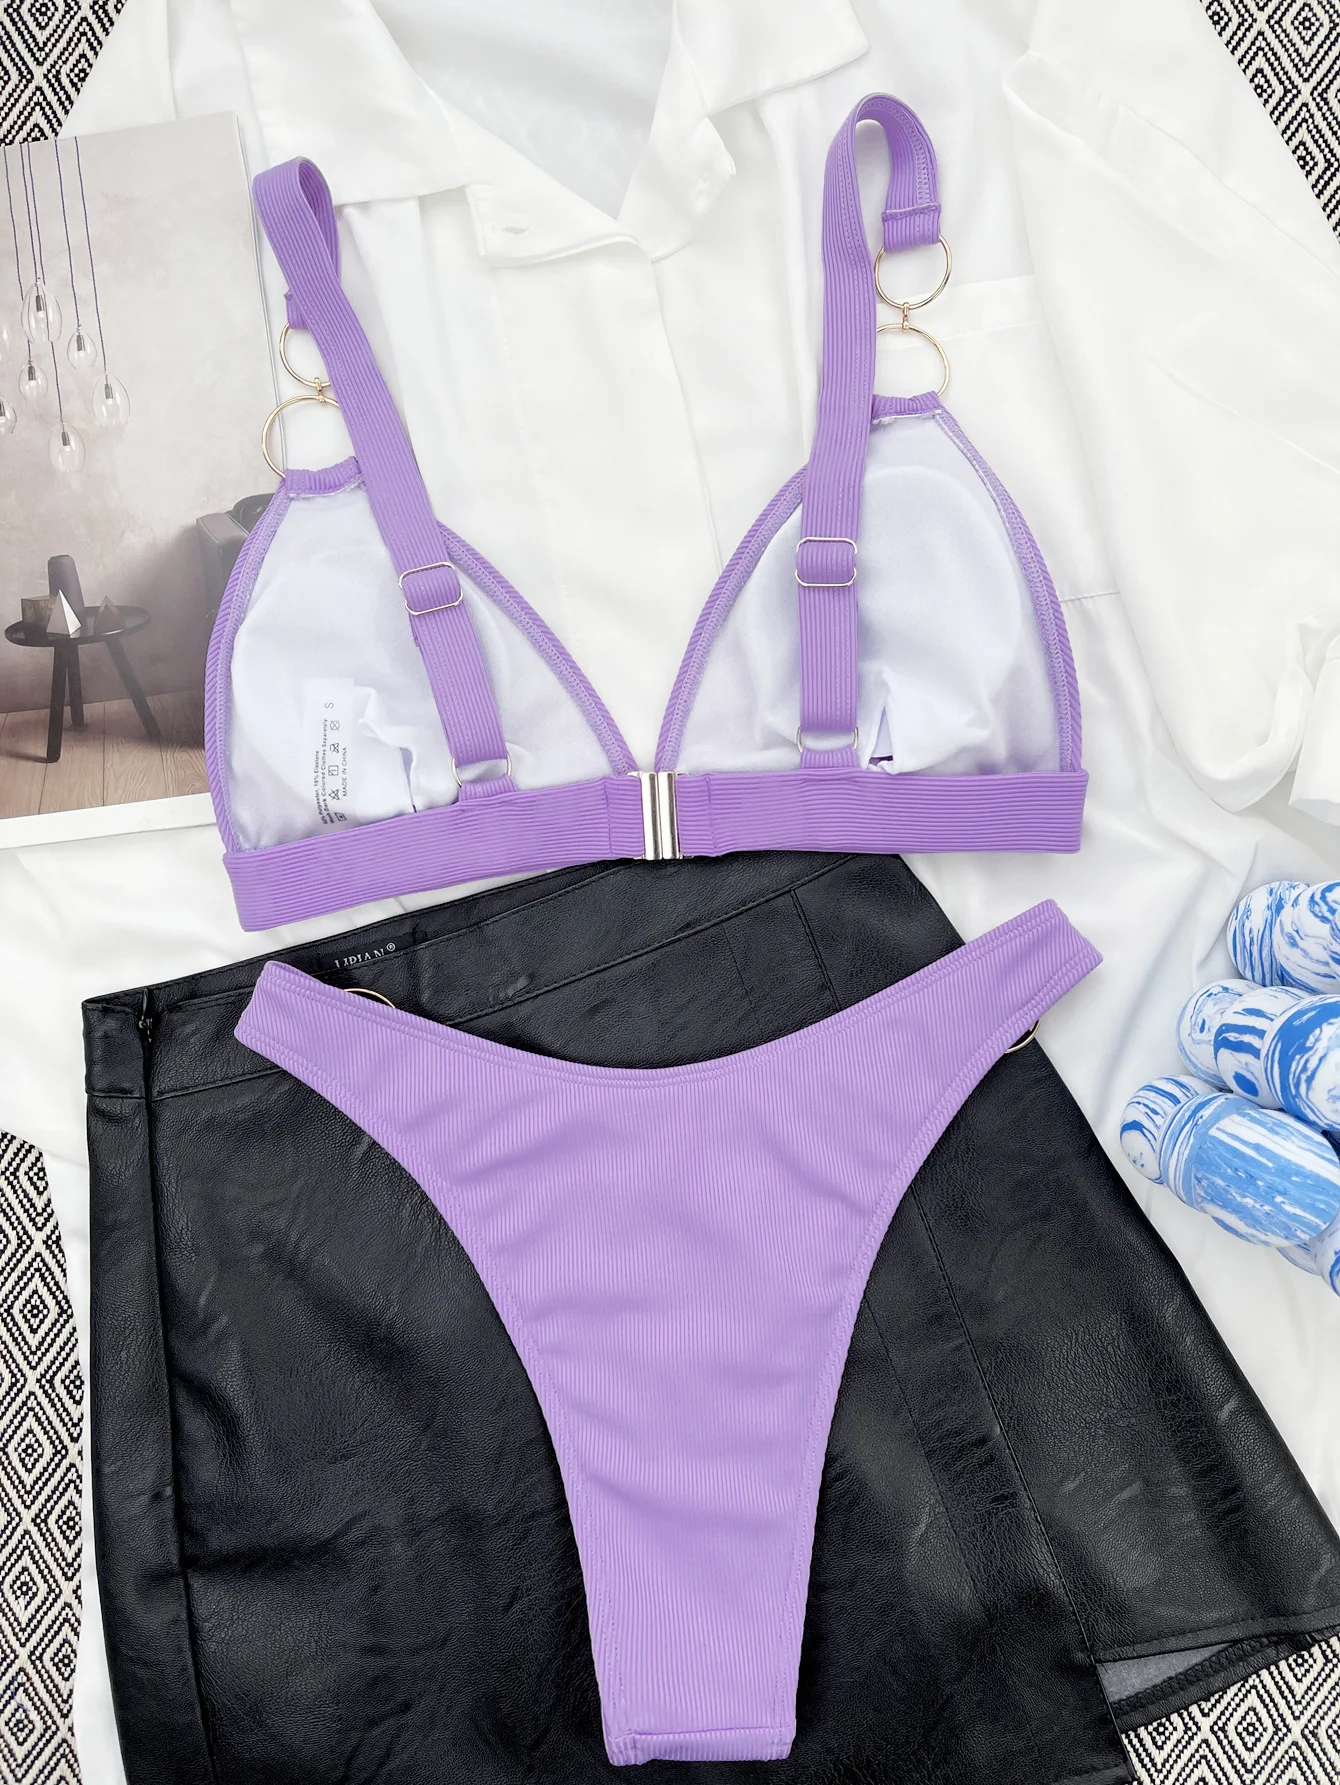 Trinkini Brazilian Nude Girls Bikini Swimwear Women Purple Thong Bikini Girls Summer Swimsuit